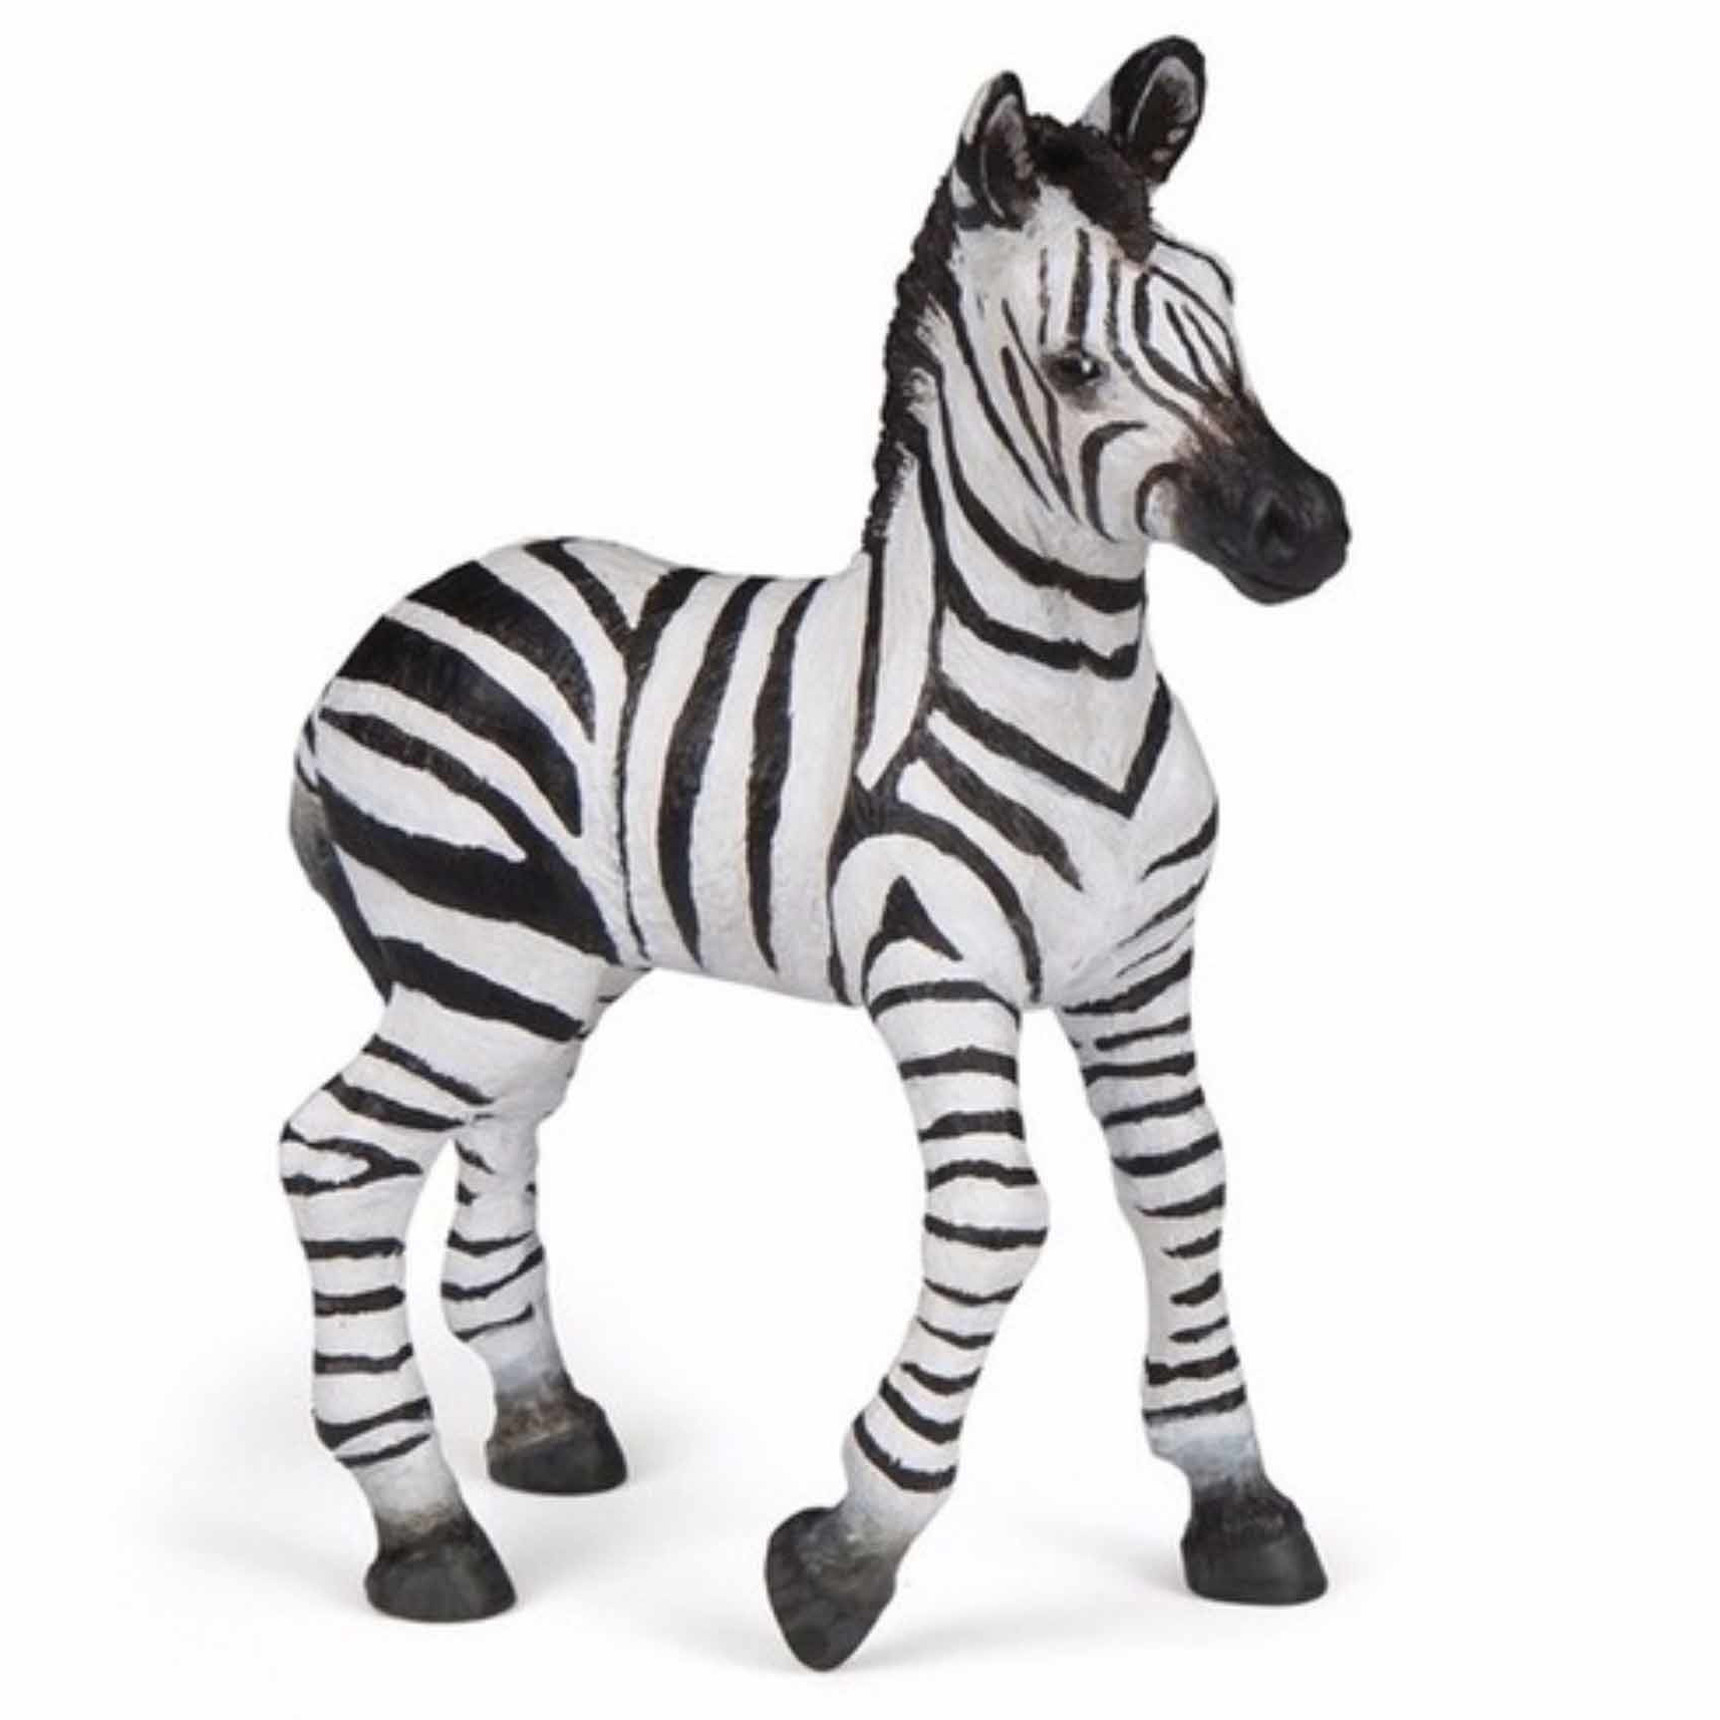 Plastic speelgoed figuur baby zebra 9 cm